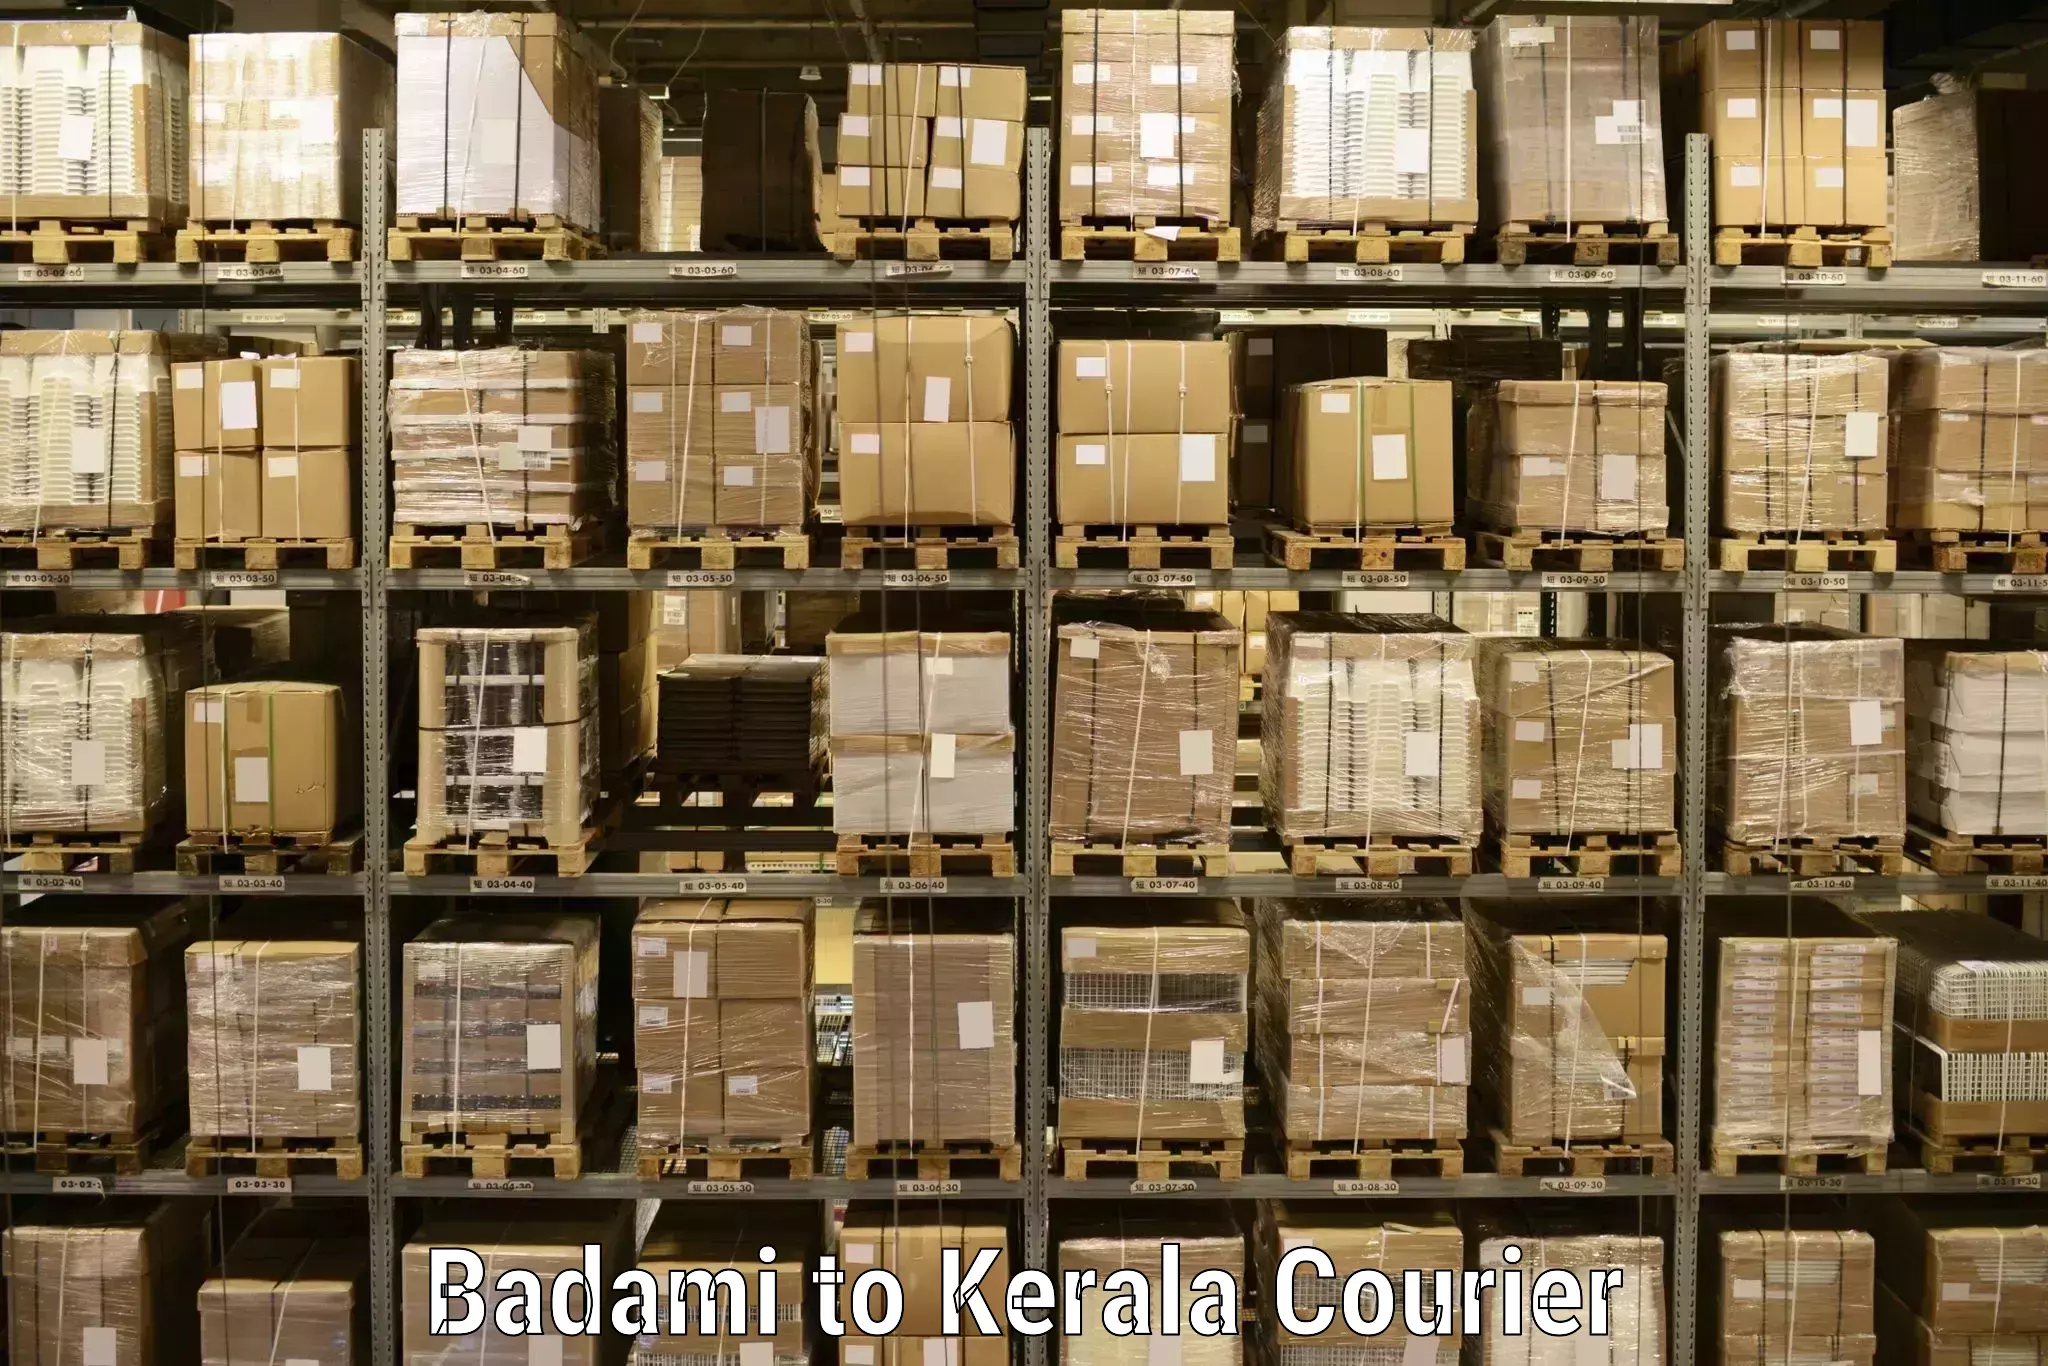 Digital courier platforms Badami to Ernakulam